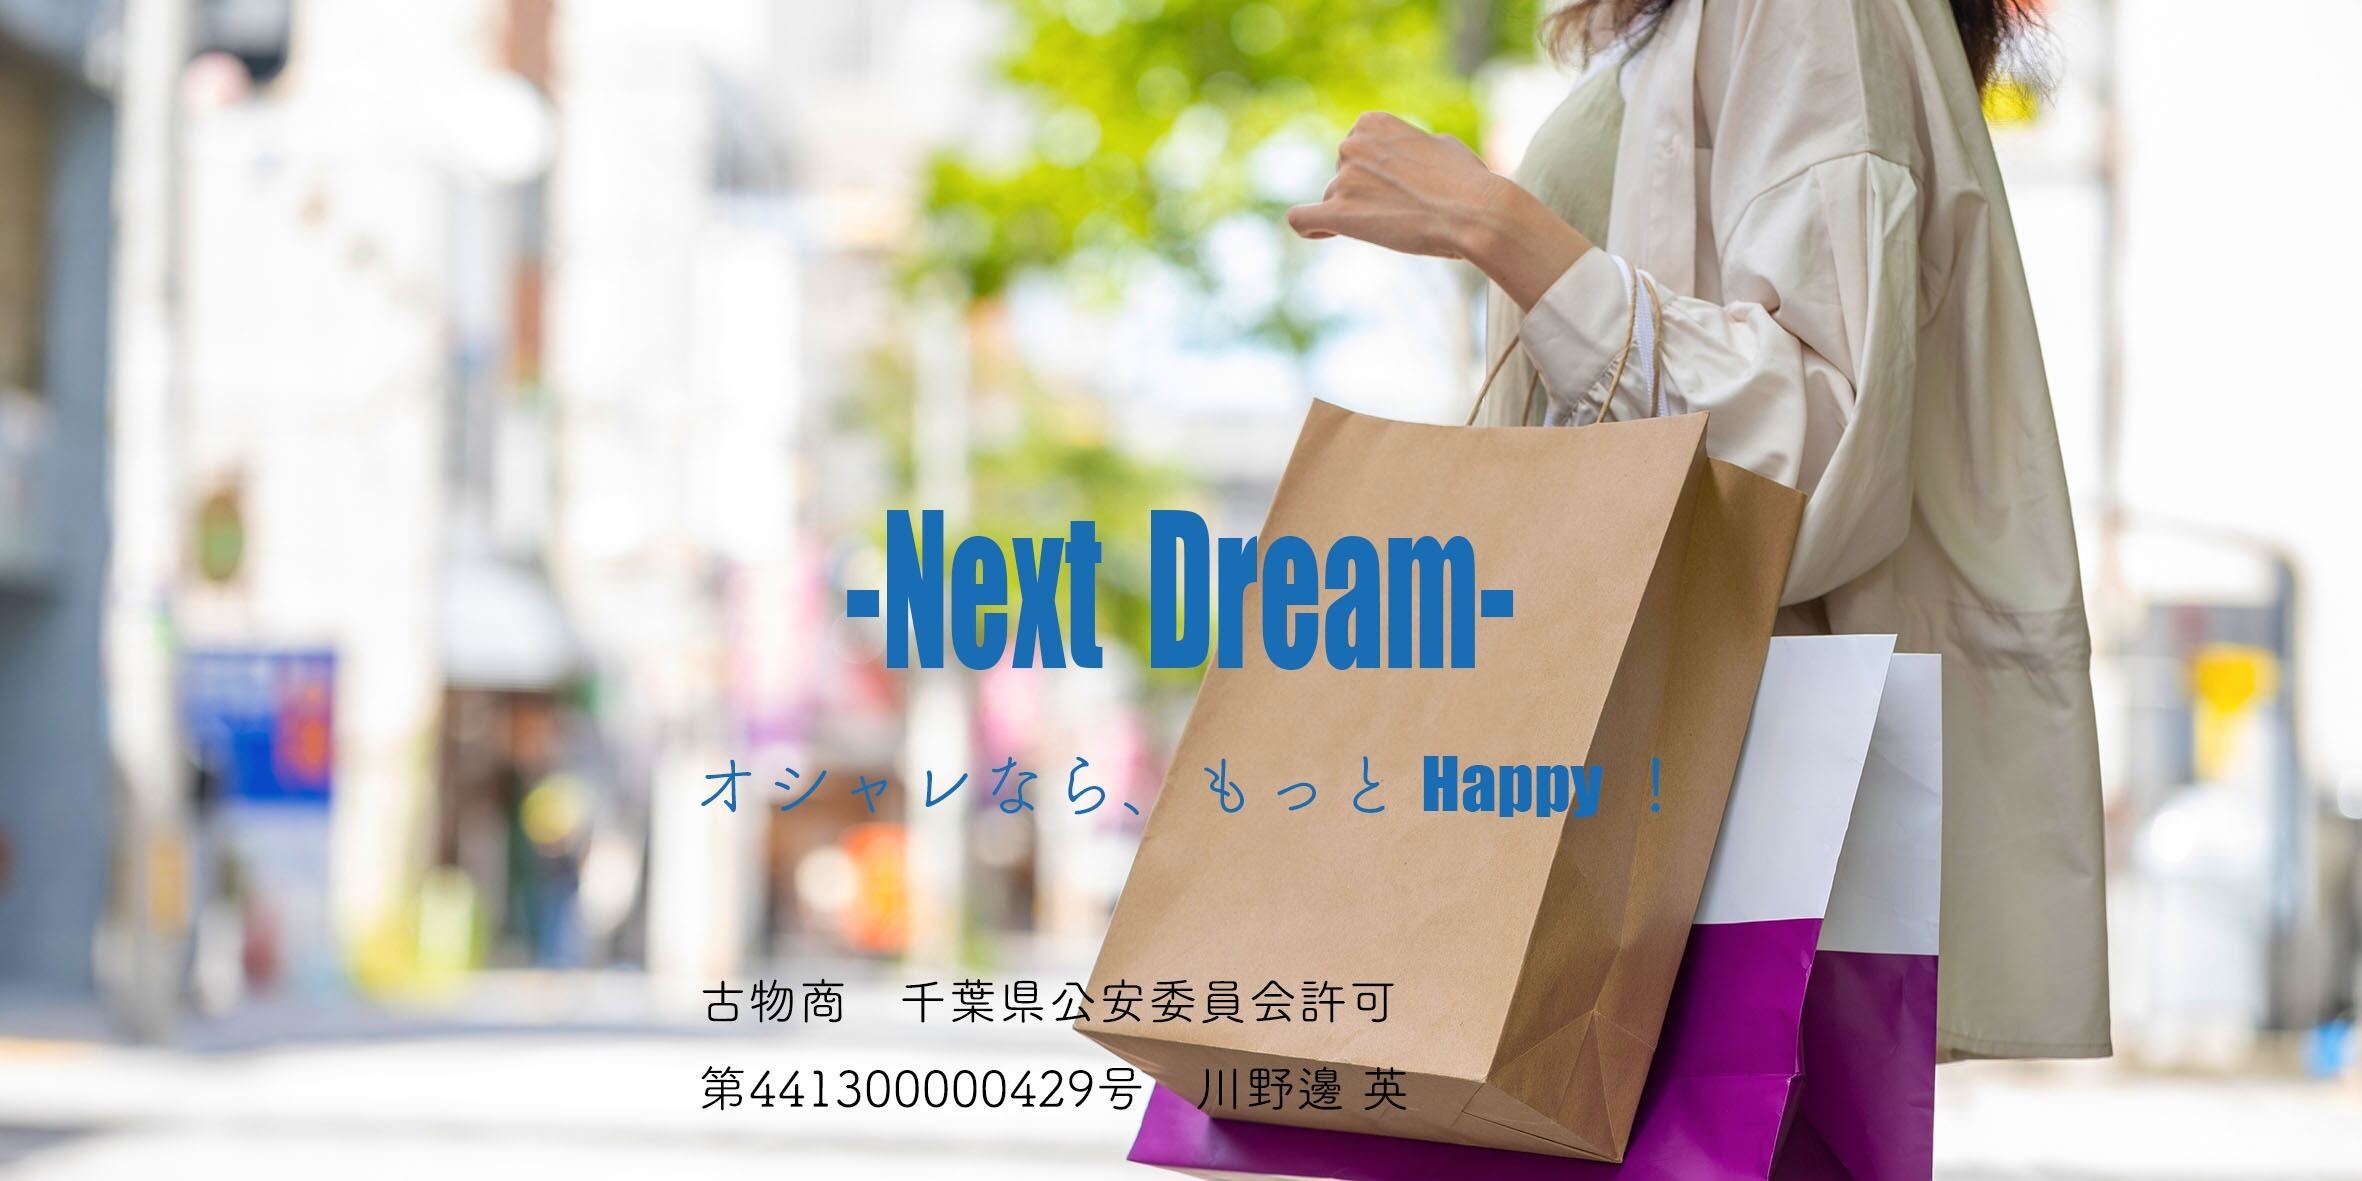 Next Dream - レディースファッションやショルダーバッグのお店